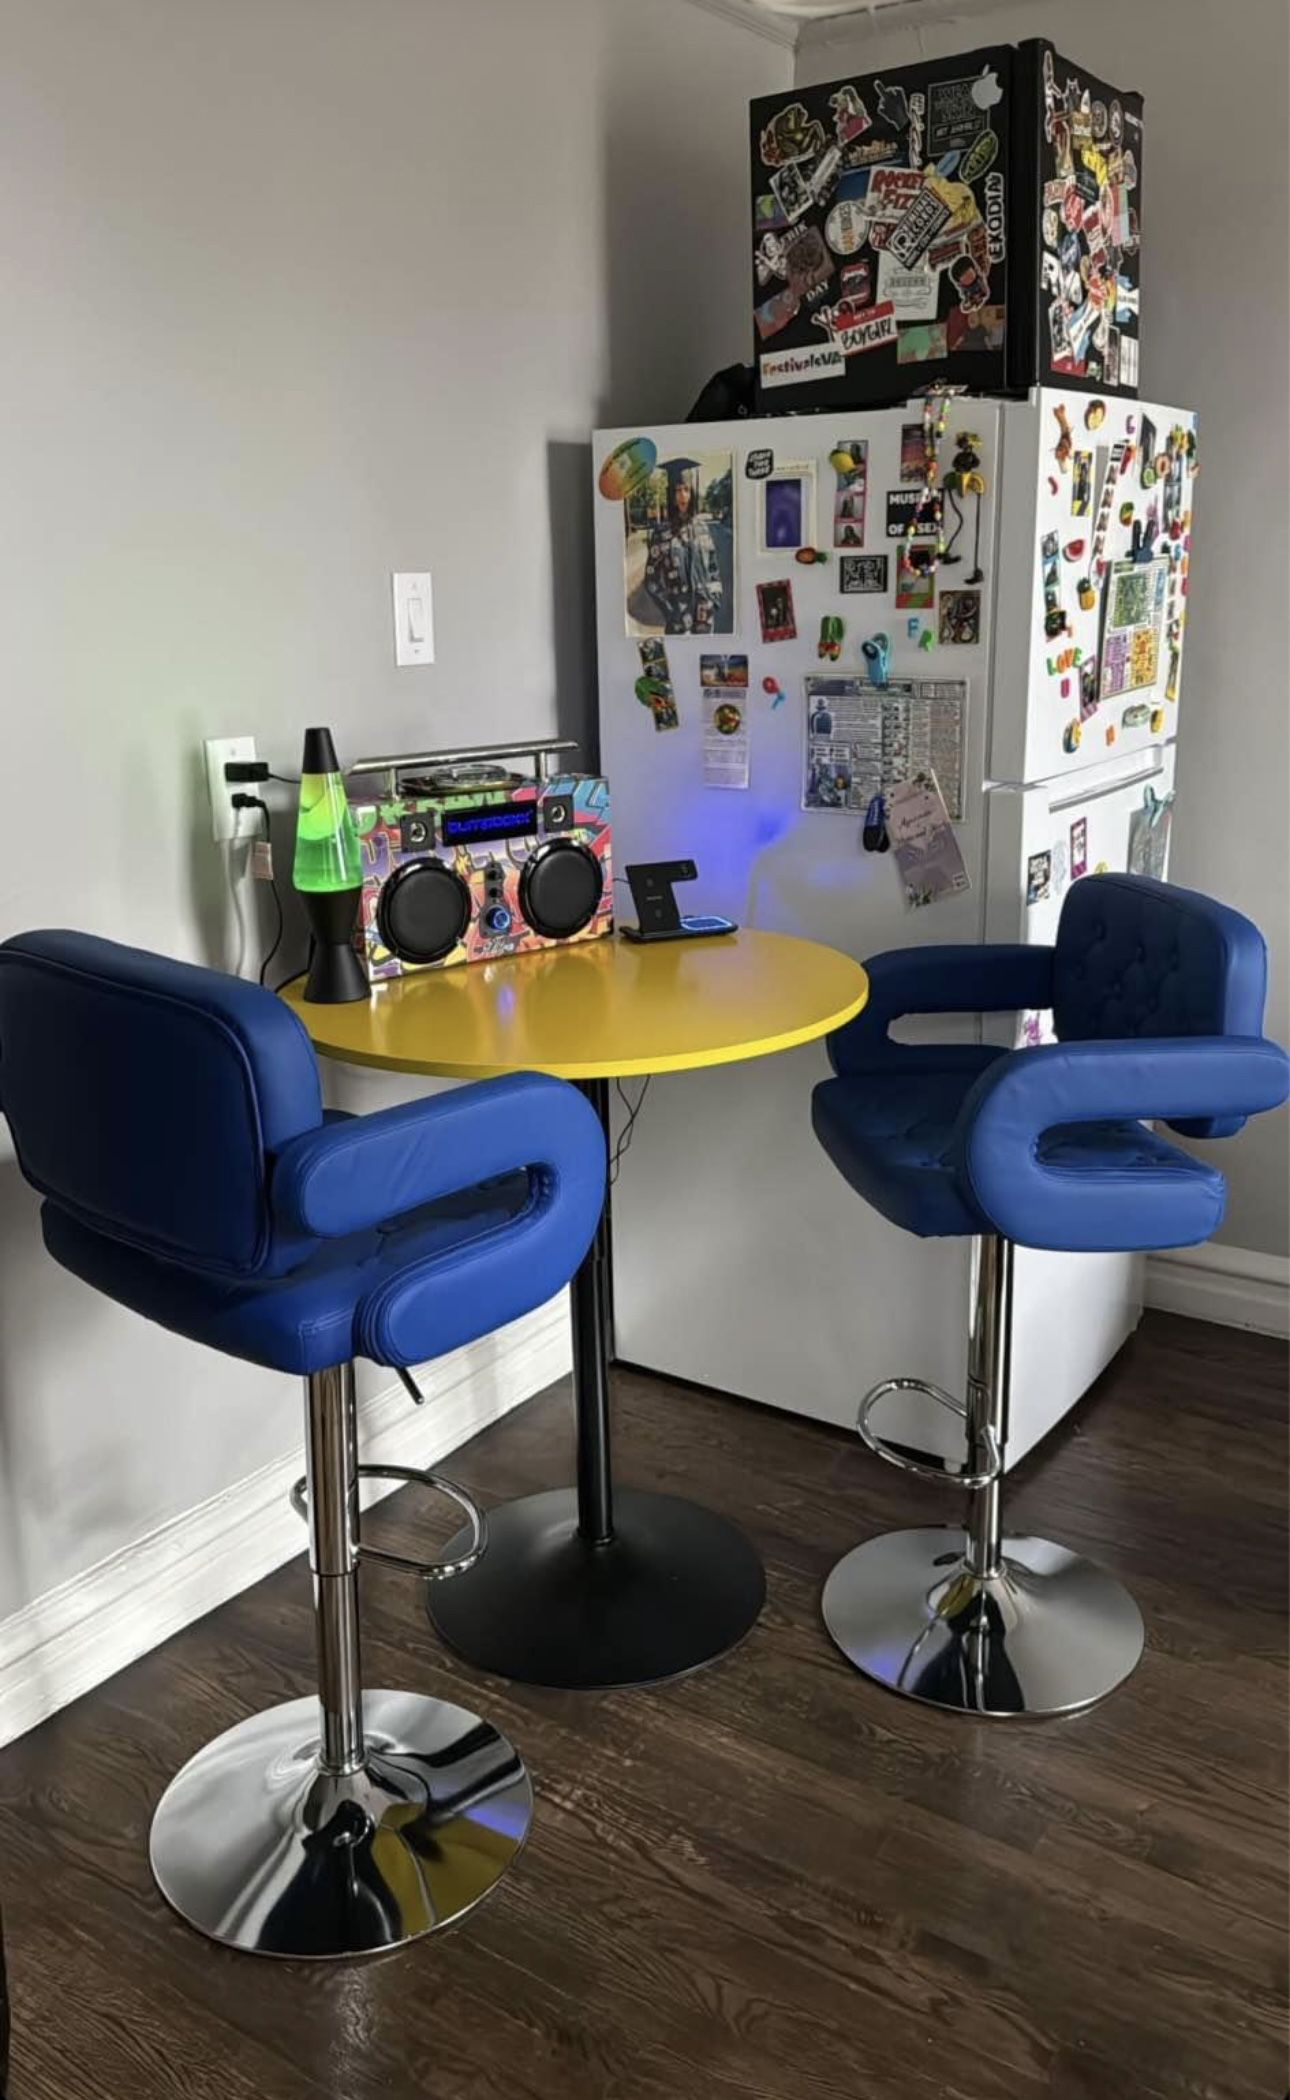 Adjustable Yellow Table & Blue Bar Stool Set